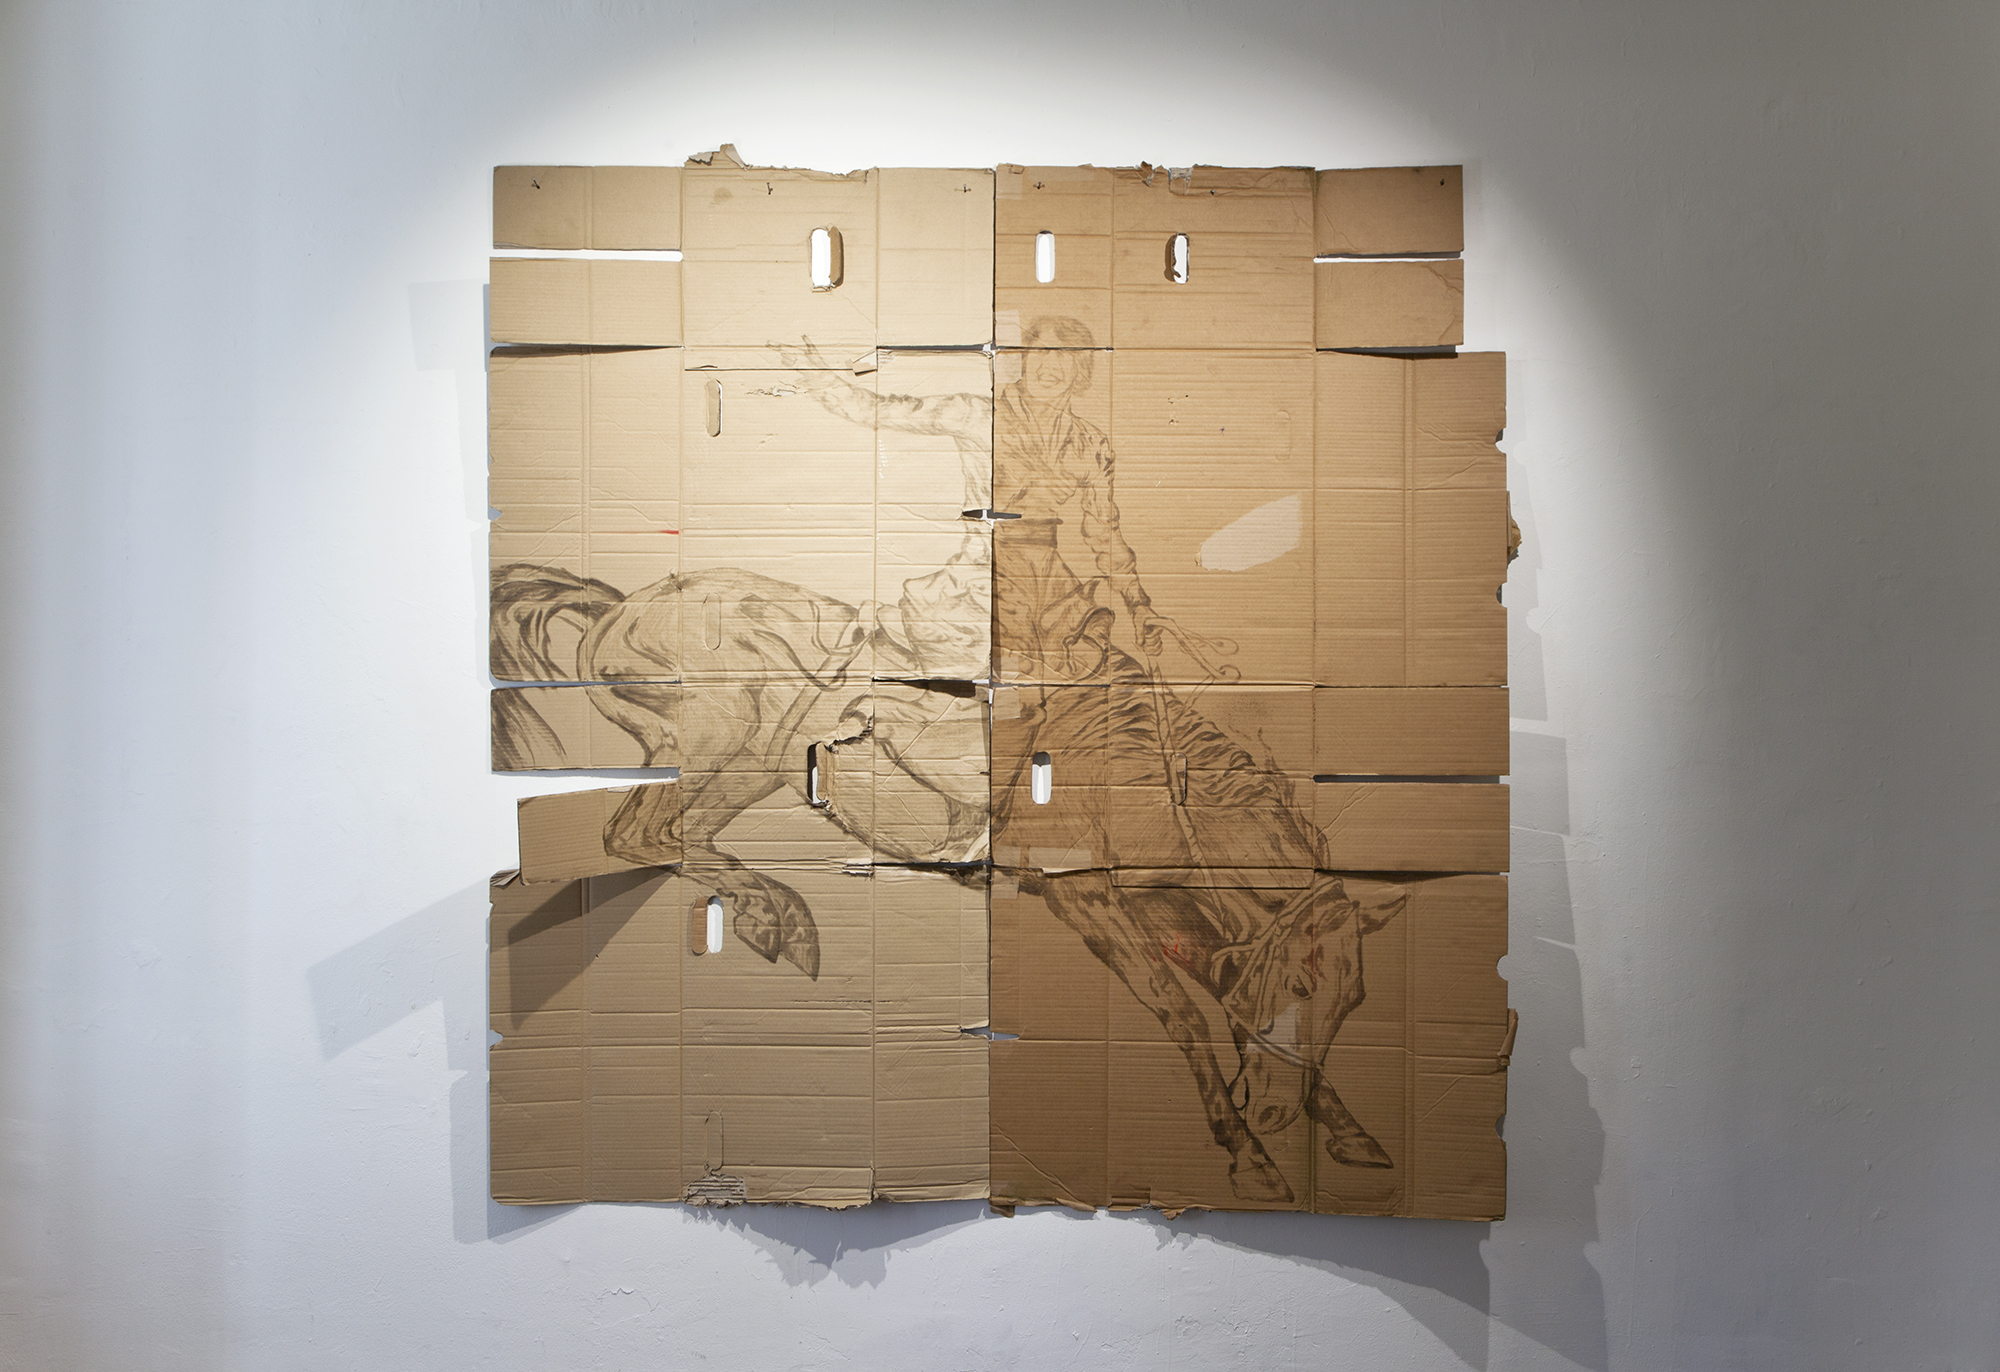 sh_wer-zuletzt-lacht_-by-sandra-hauser-2018-linseed-oil-on-cardboard-200x220cm.-courtesy-the-artist